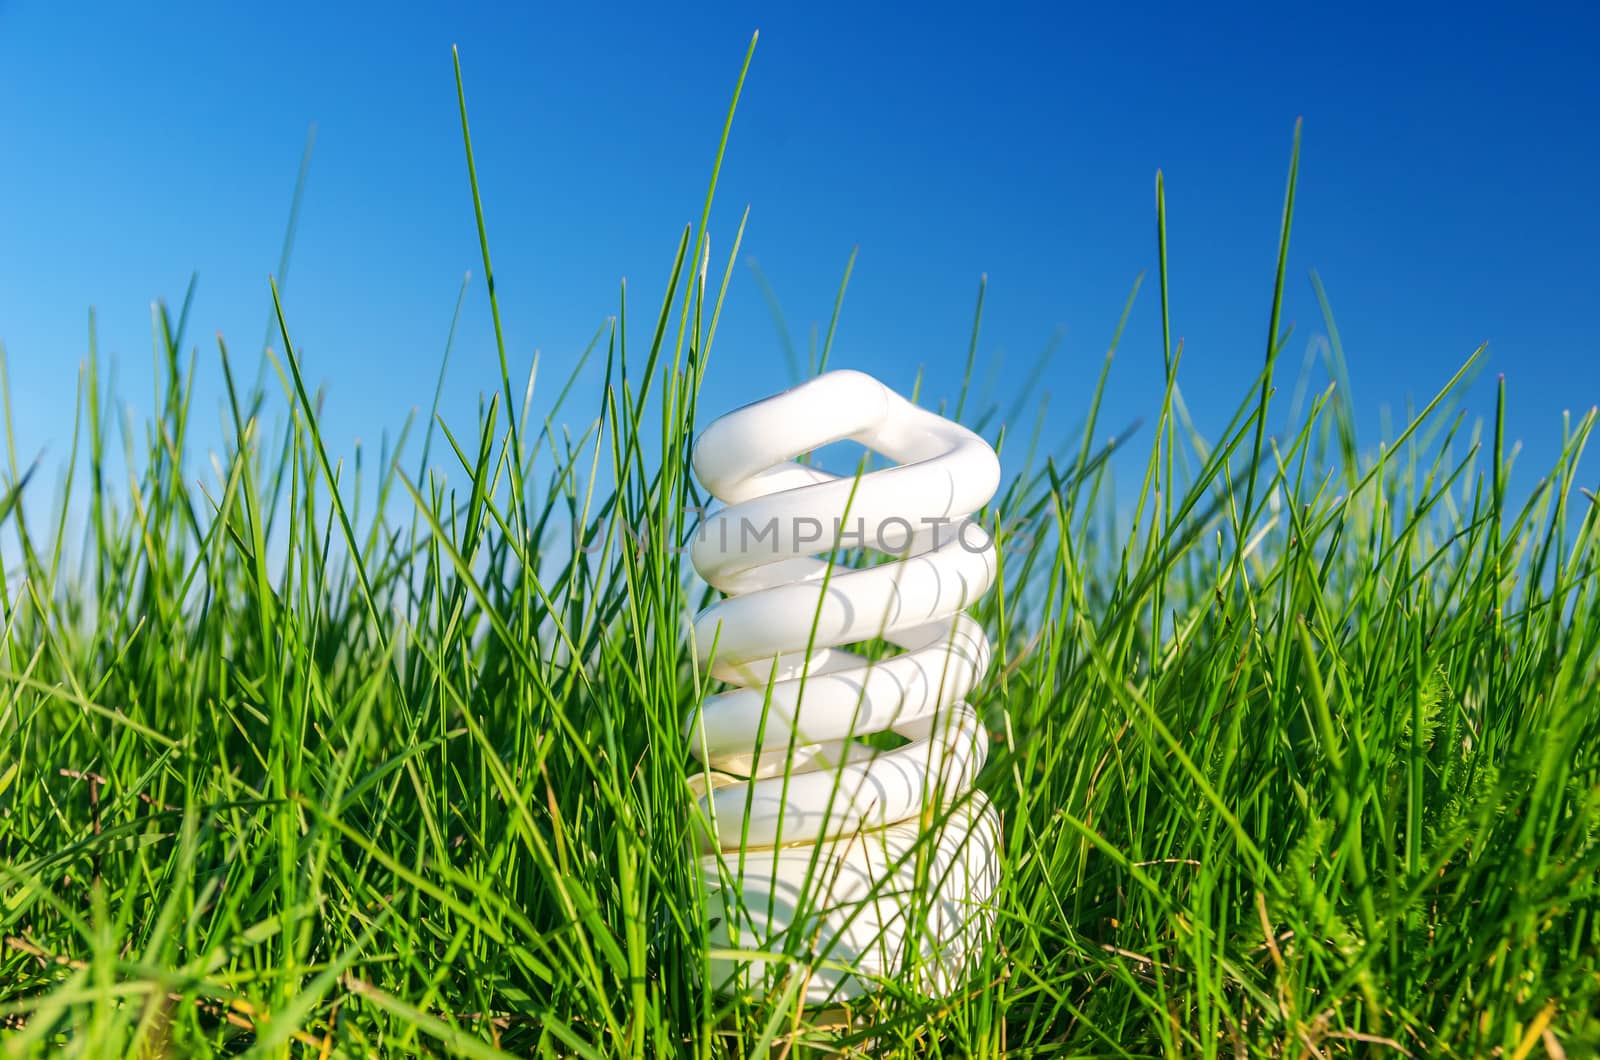 energy saving bulb in green grass against blue sky by mycola